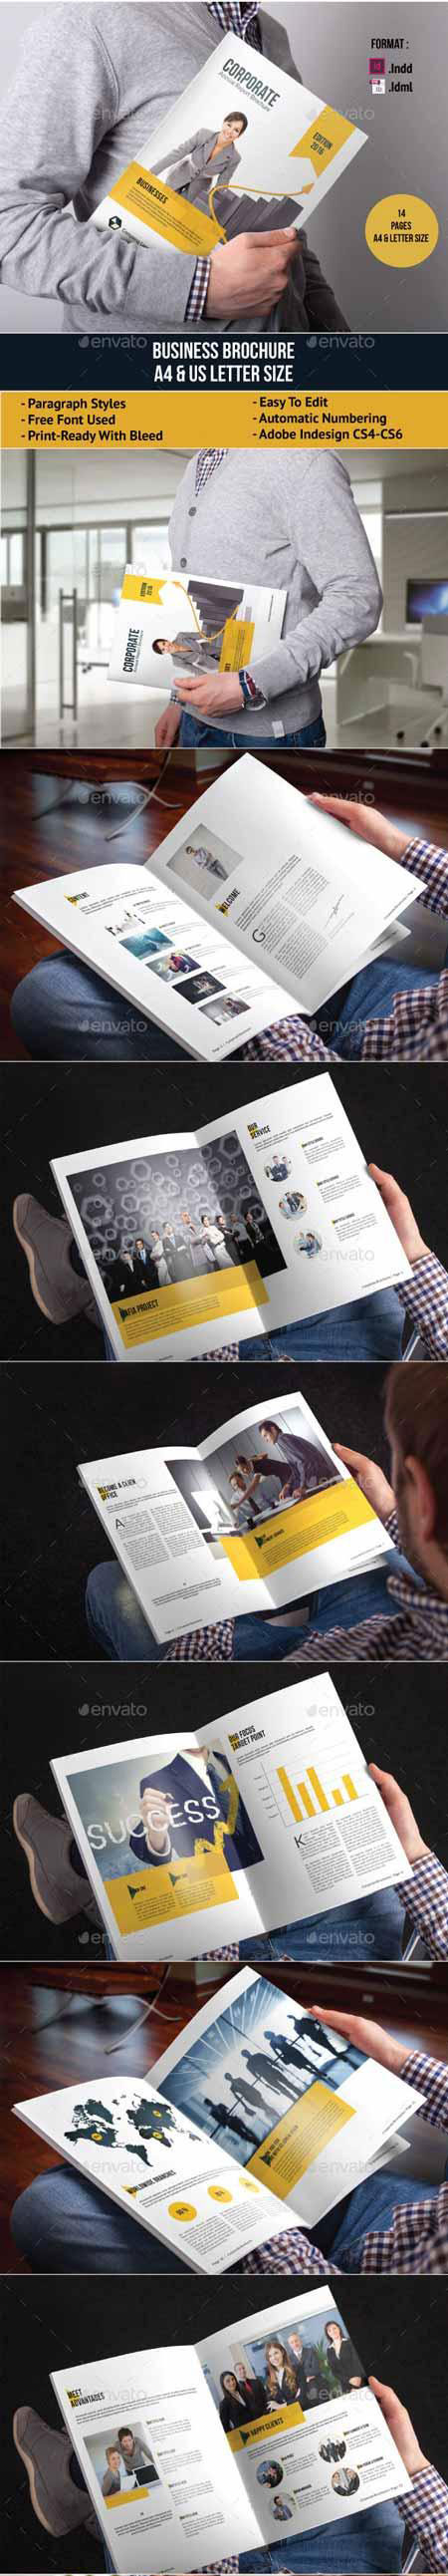 دانلود بروشور کسب و کار Business Brochure Template